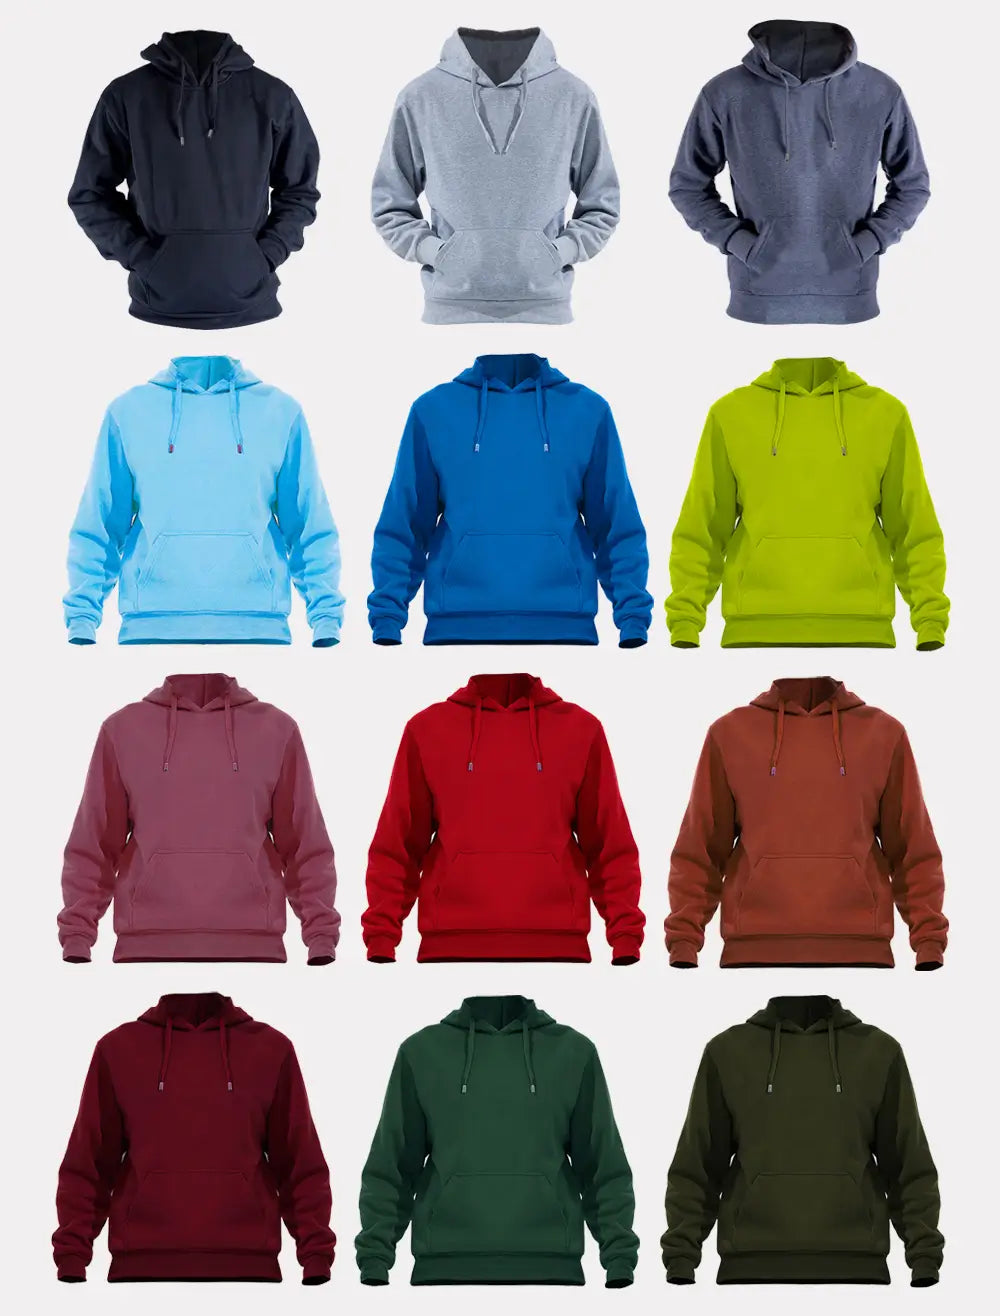 LEEHANTON men's hoodies 12 colors